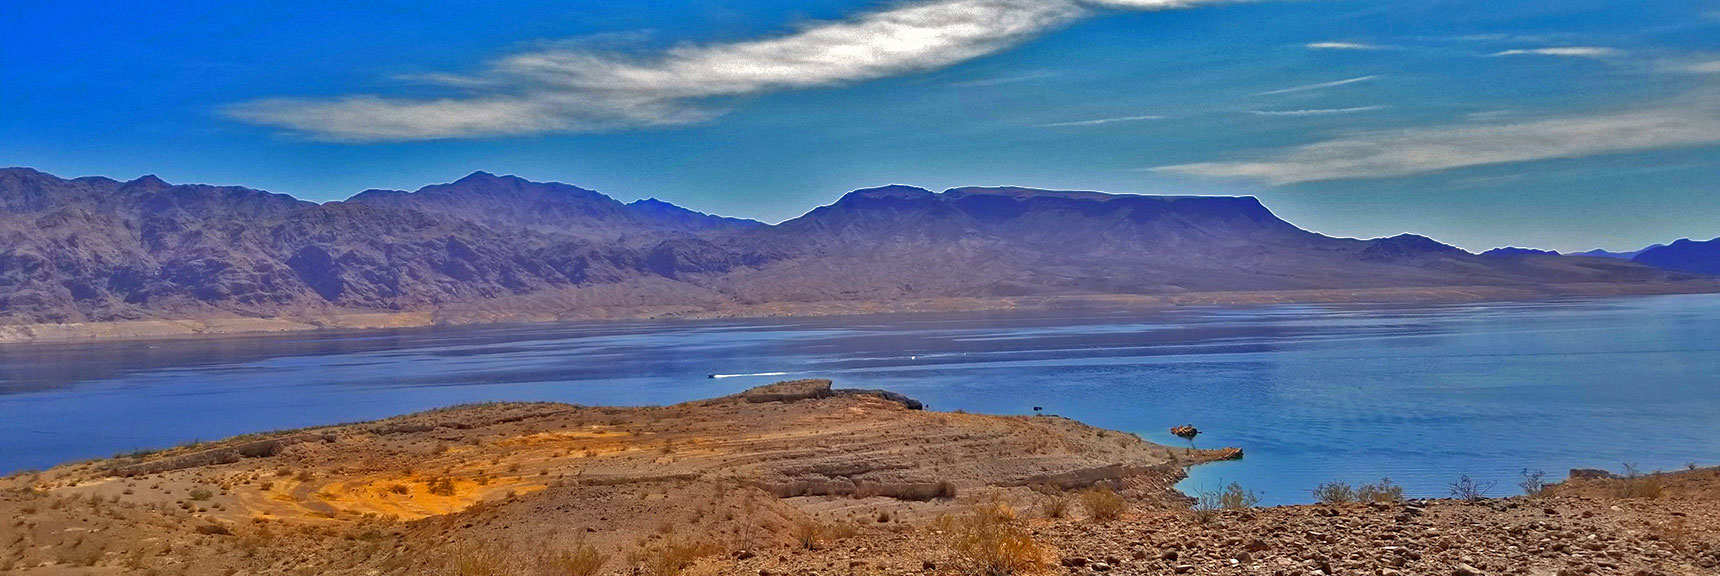 Callville Summit Trail |Lake Mead National Recreation Area, Nevada